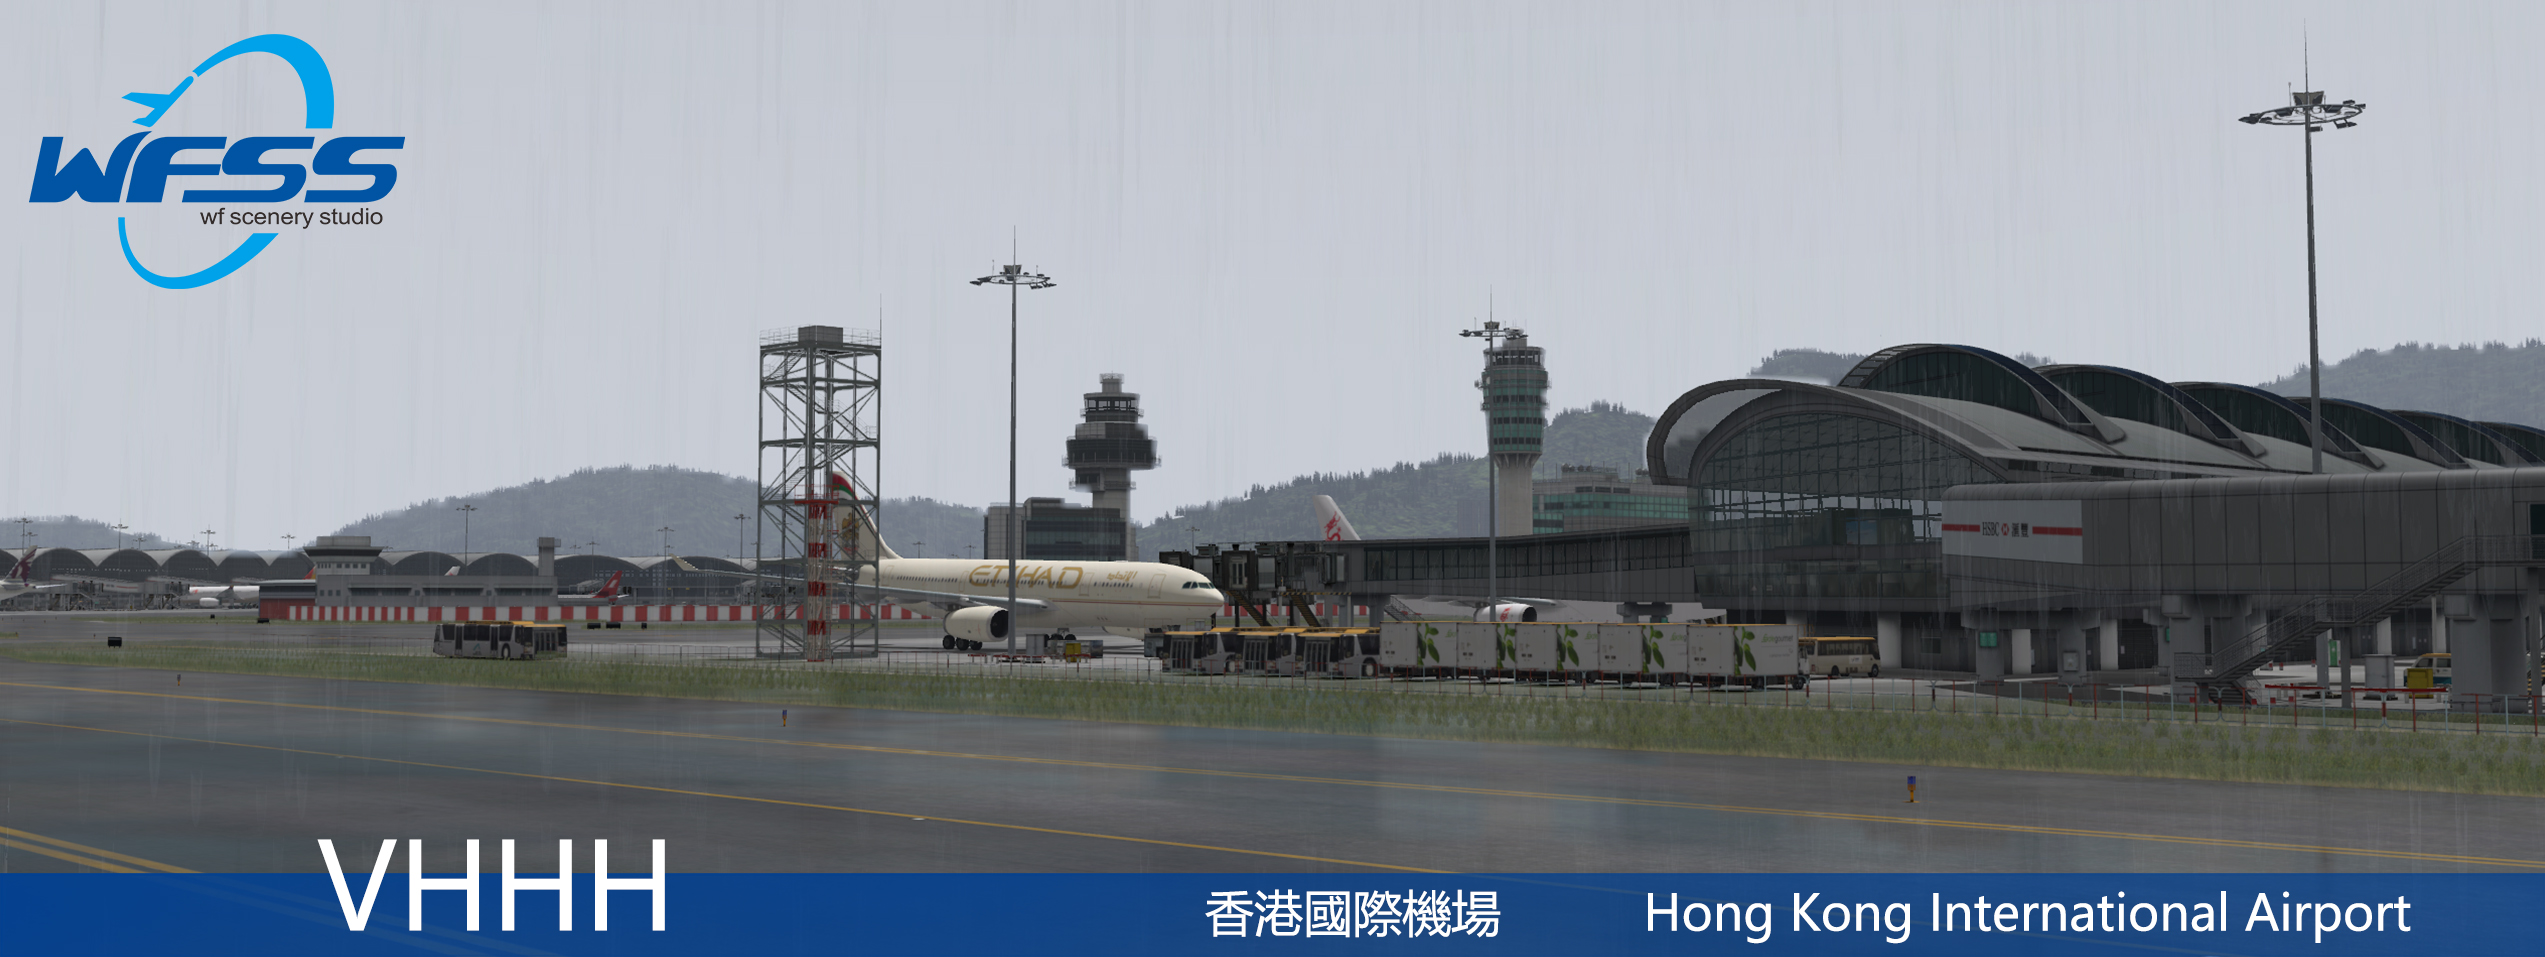 WFSS-香港国际机场发布-1165 